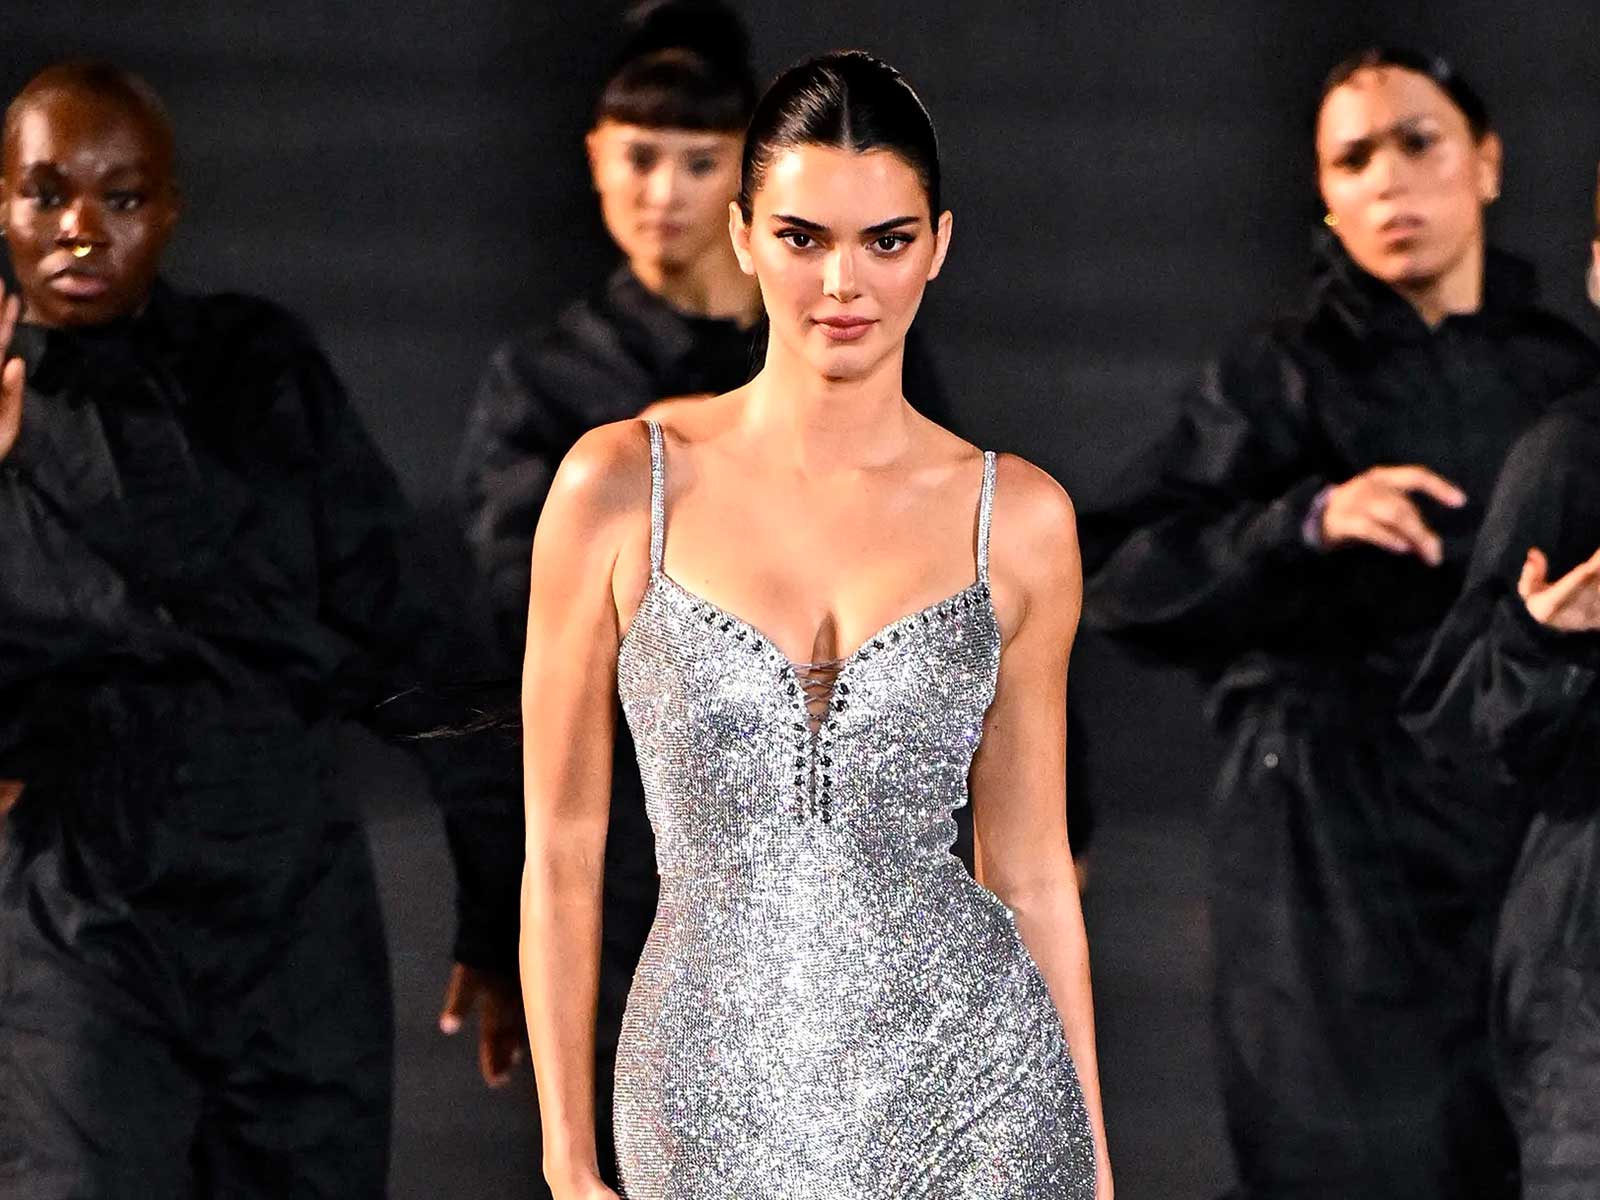 Kendall Jenner wearing a silver dress